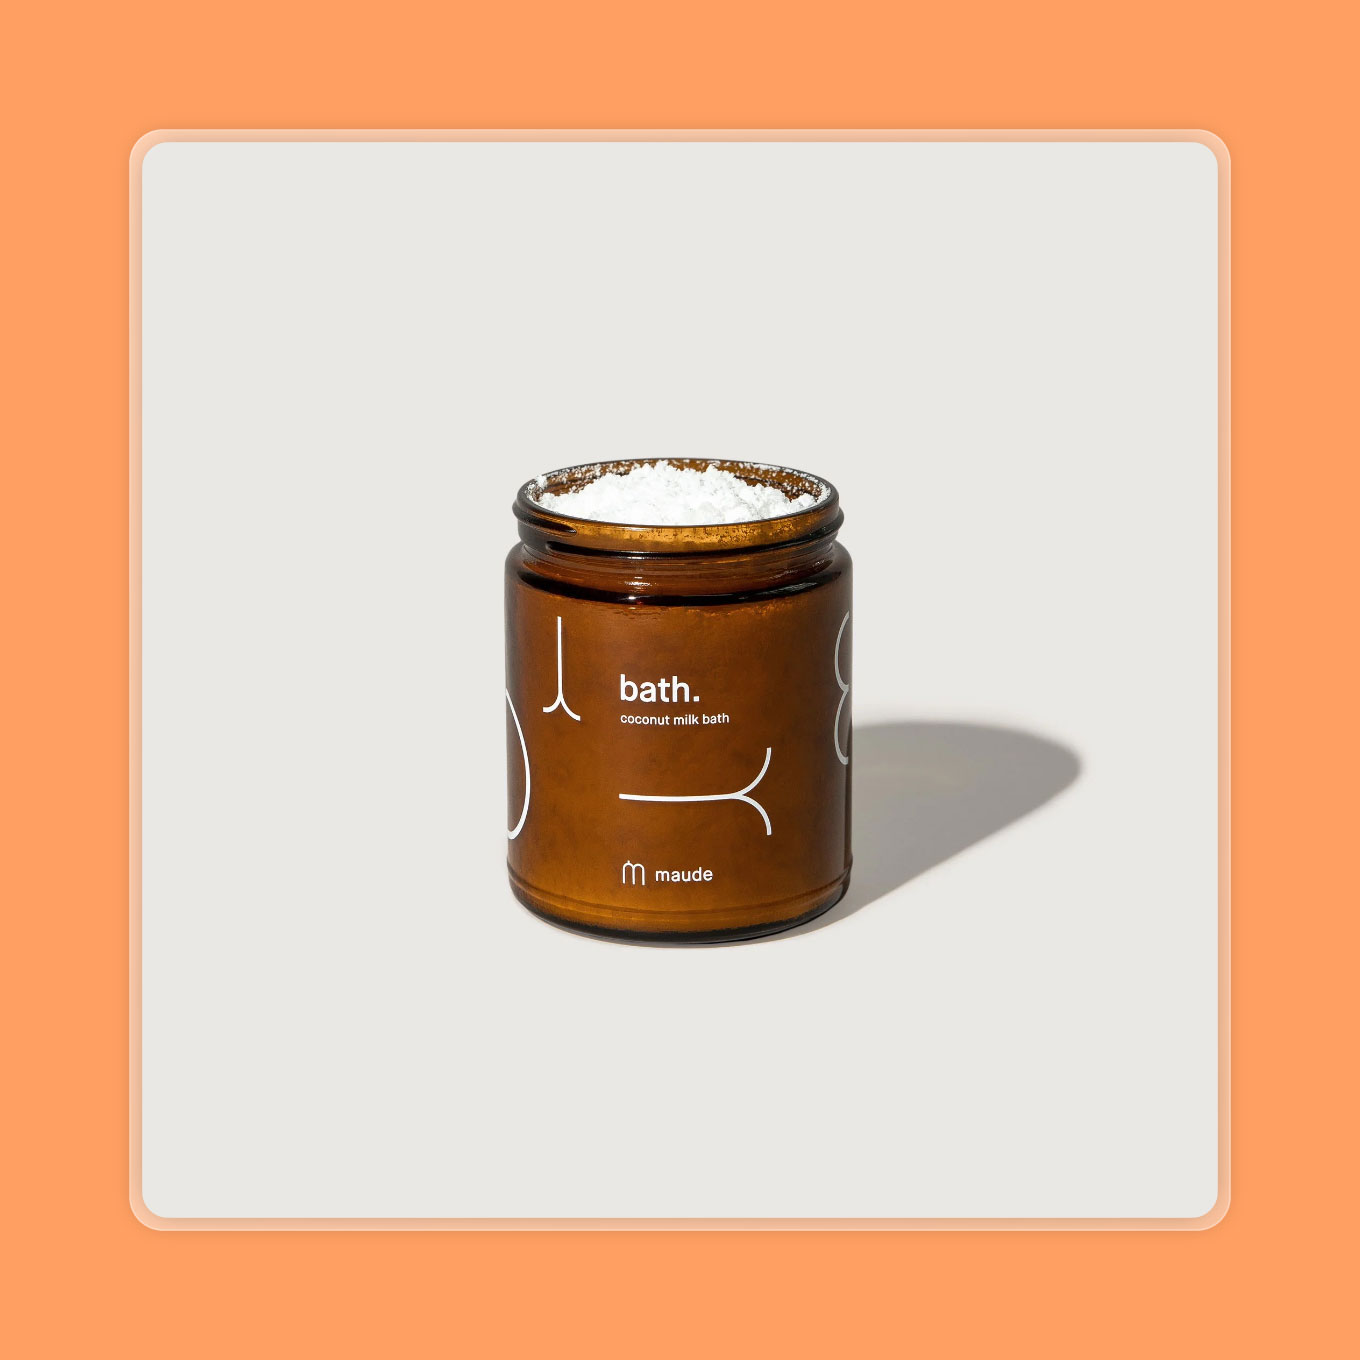 An amber glass jar is filled with a milk bath powder